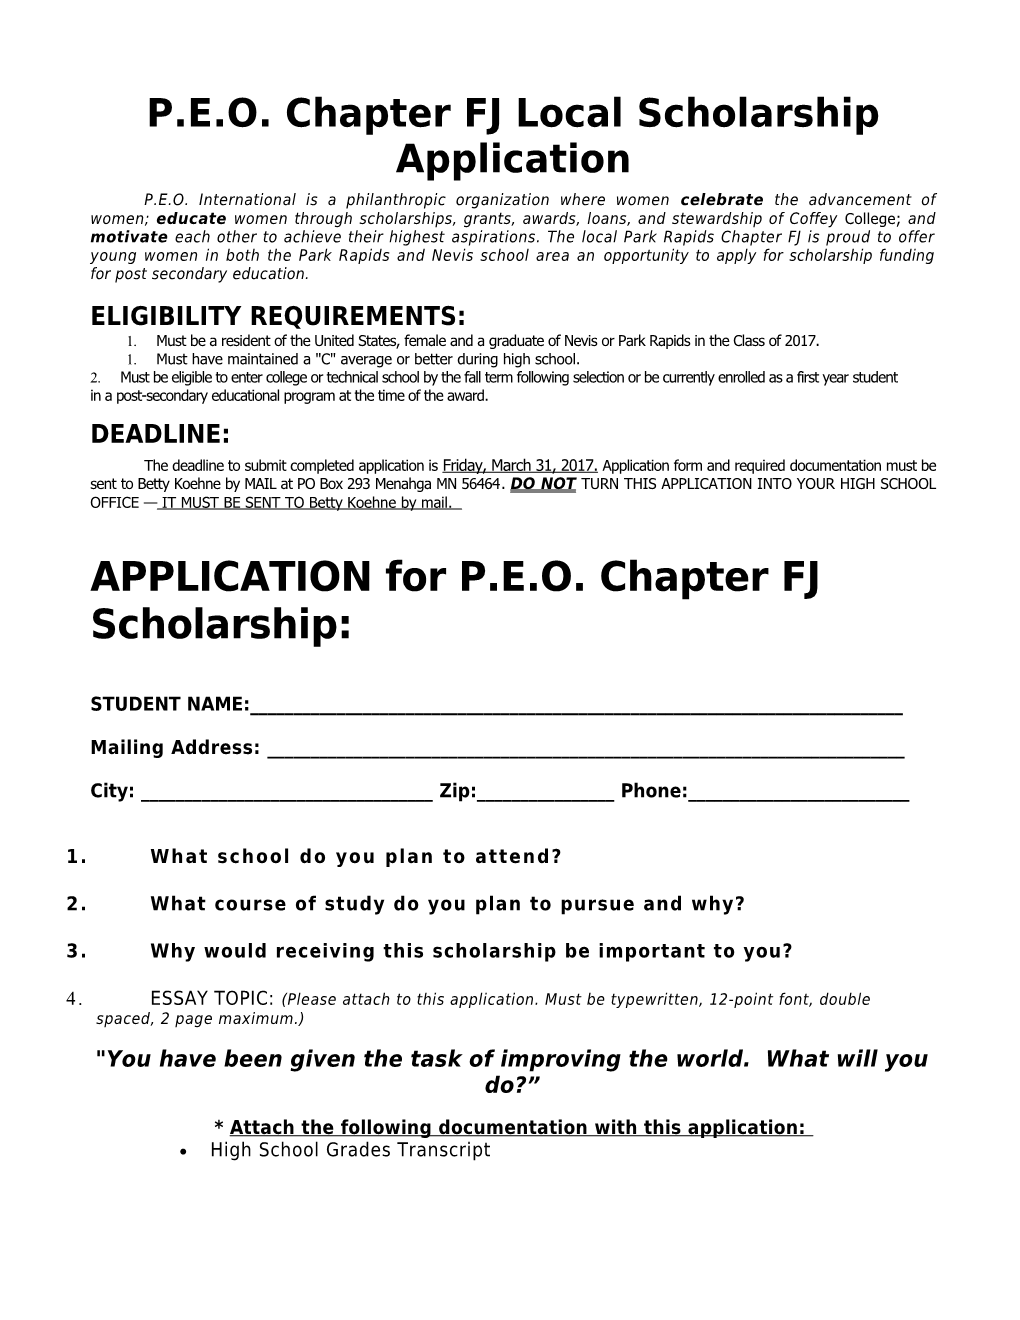 P.E.O. Chapter FJ Local Scholarship Application